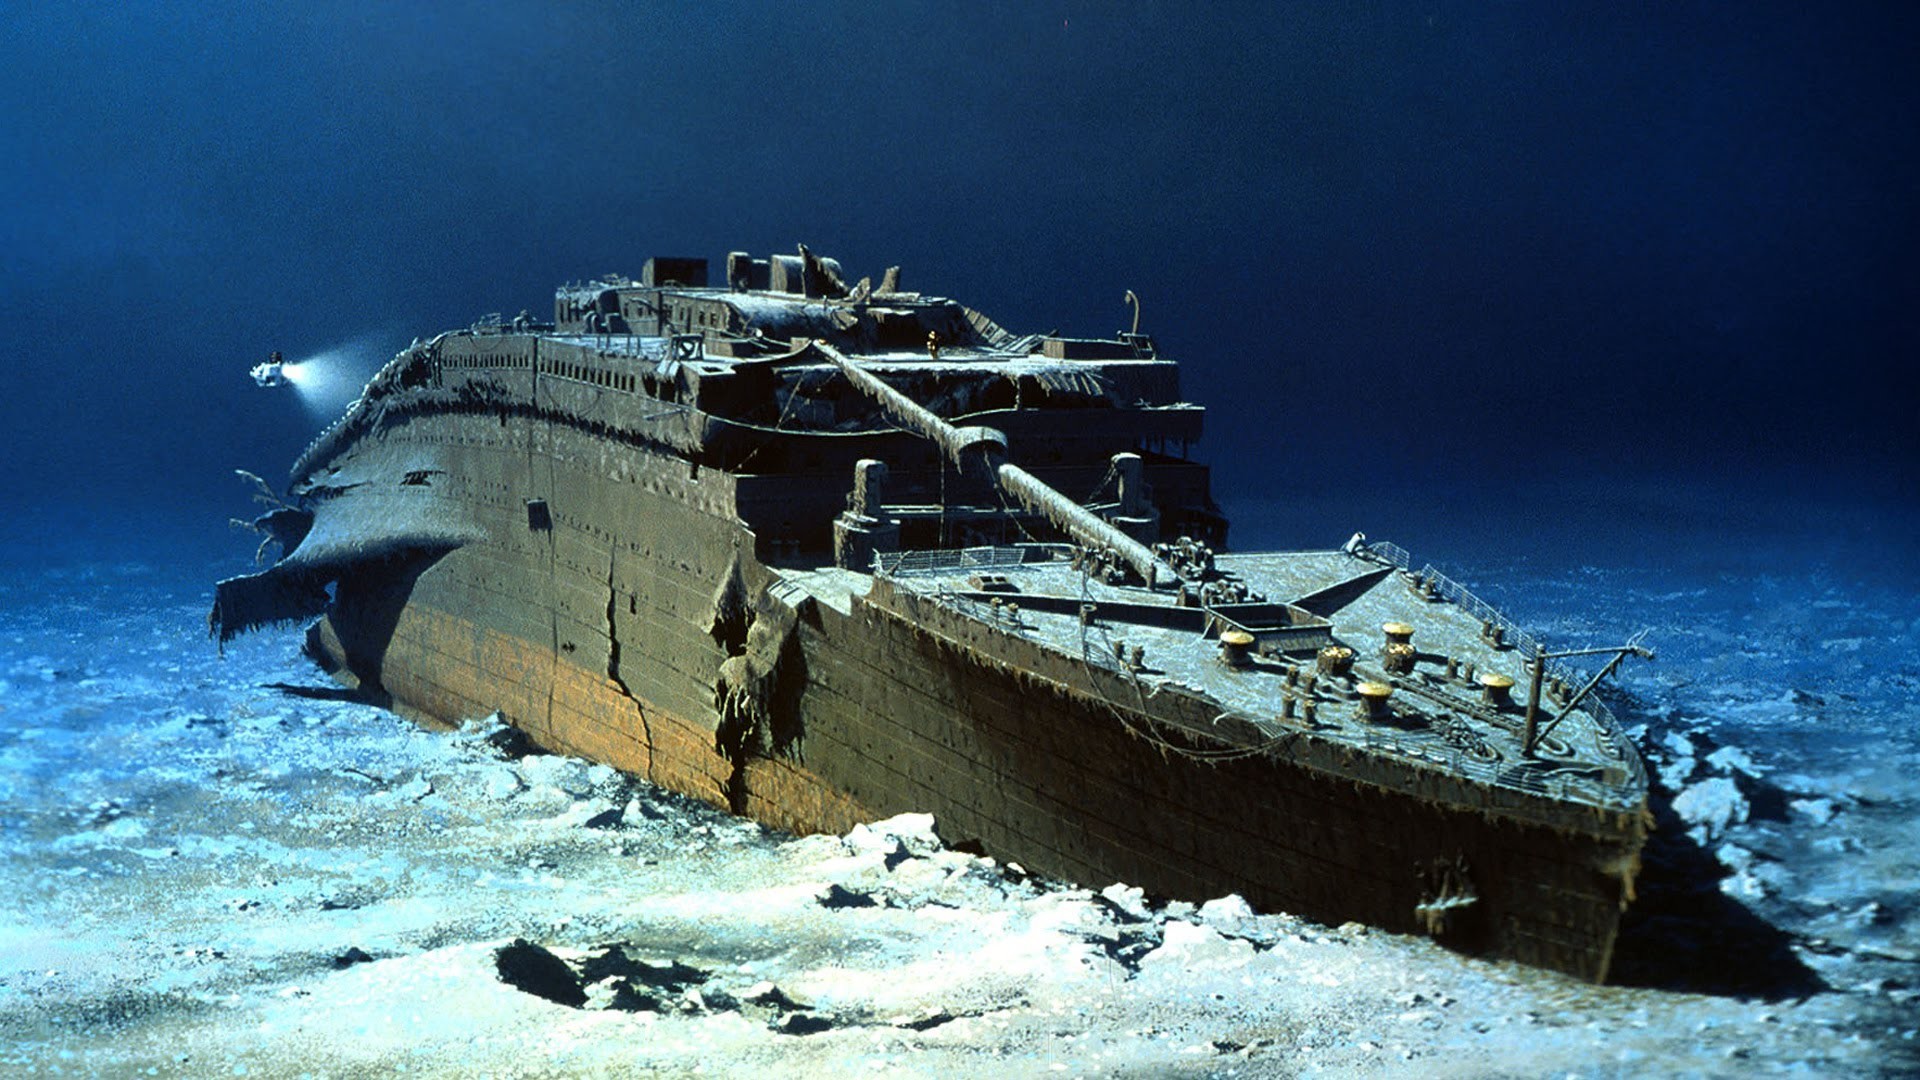 the Titanic wreck | Rms titanic, Titanic wreck, Titanic history